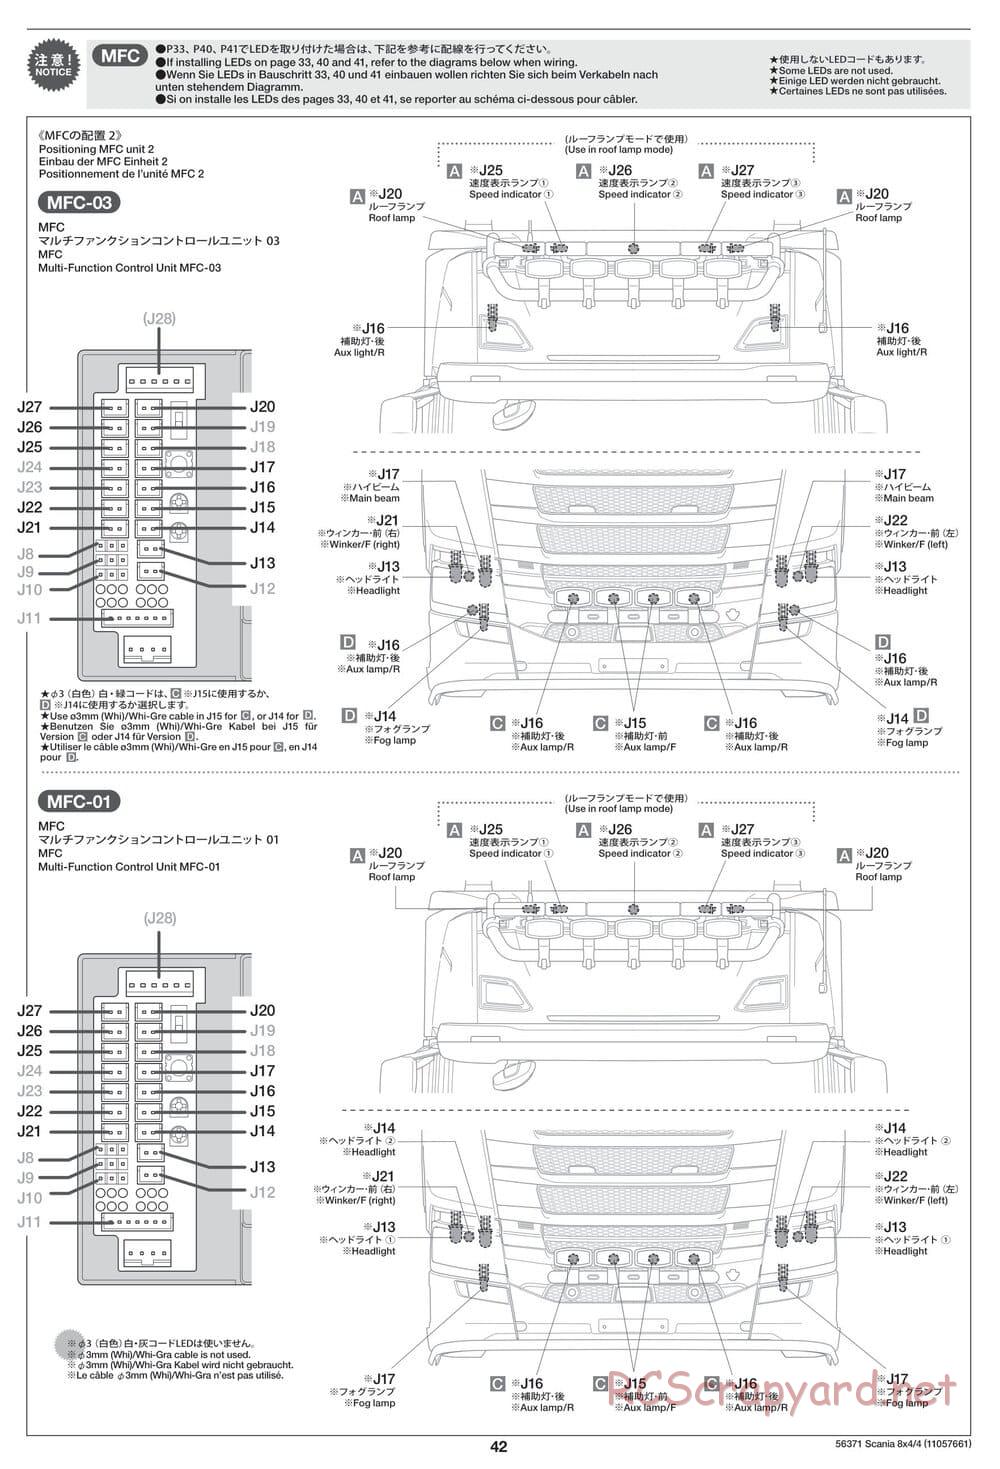 Tamiya - Scania 770 S 8x4/4 Chassis - Manual - Page 42